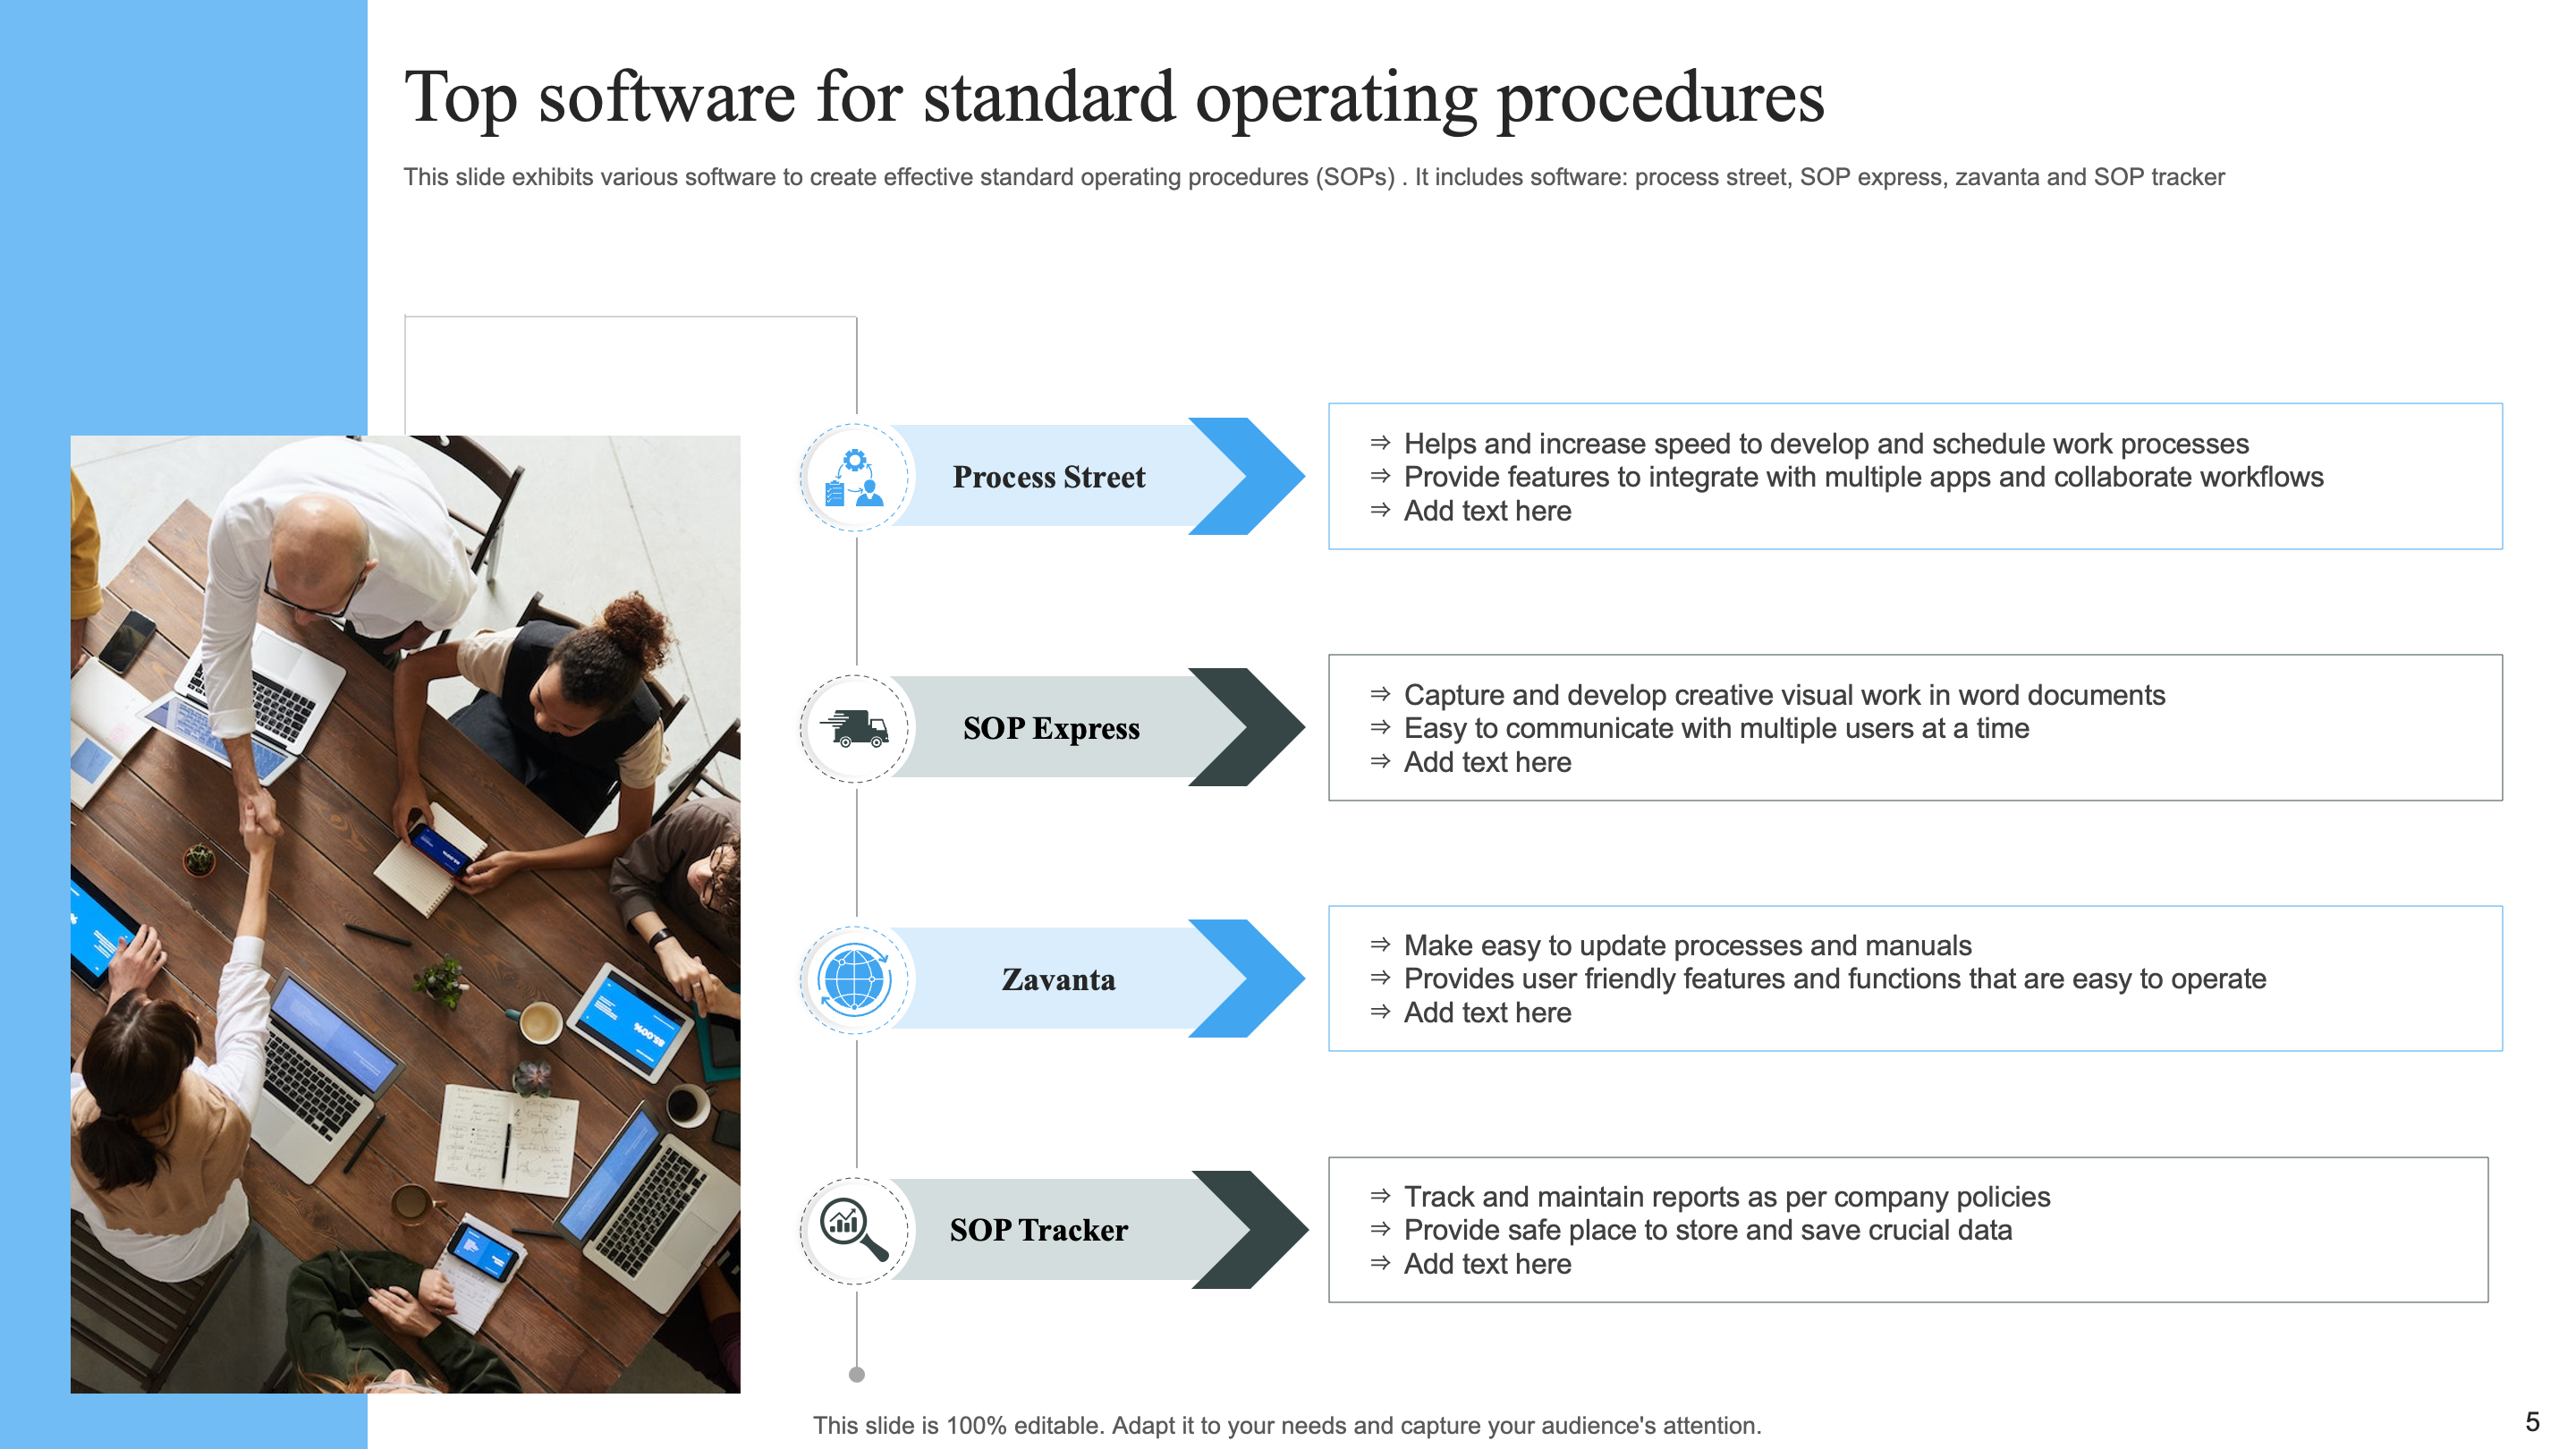 Top Software for Standard Operating Procedures